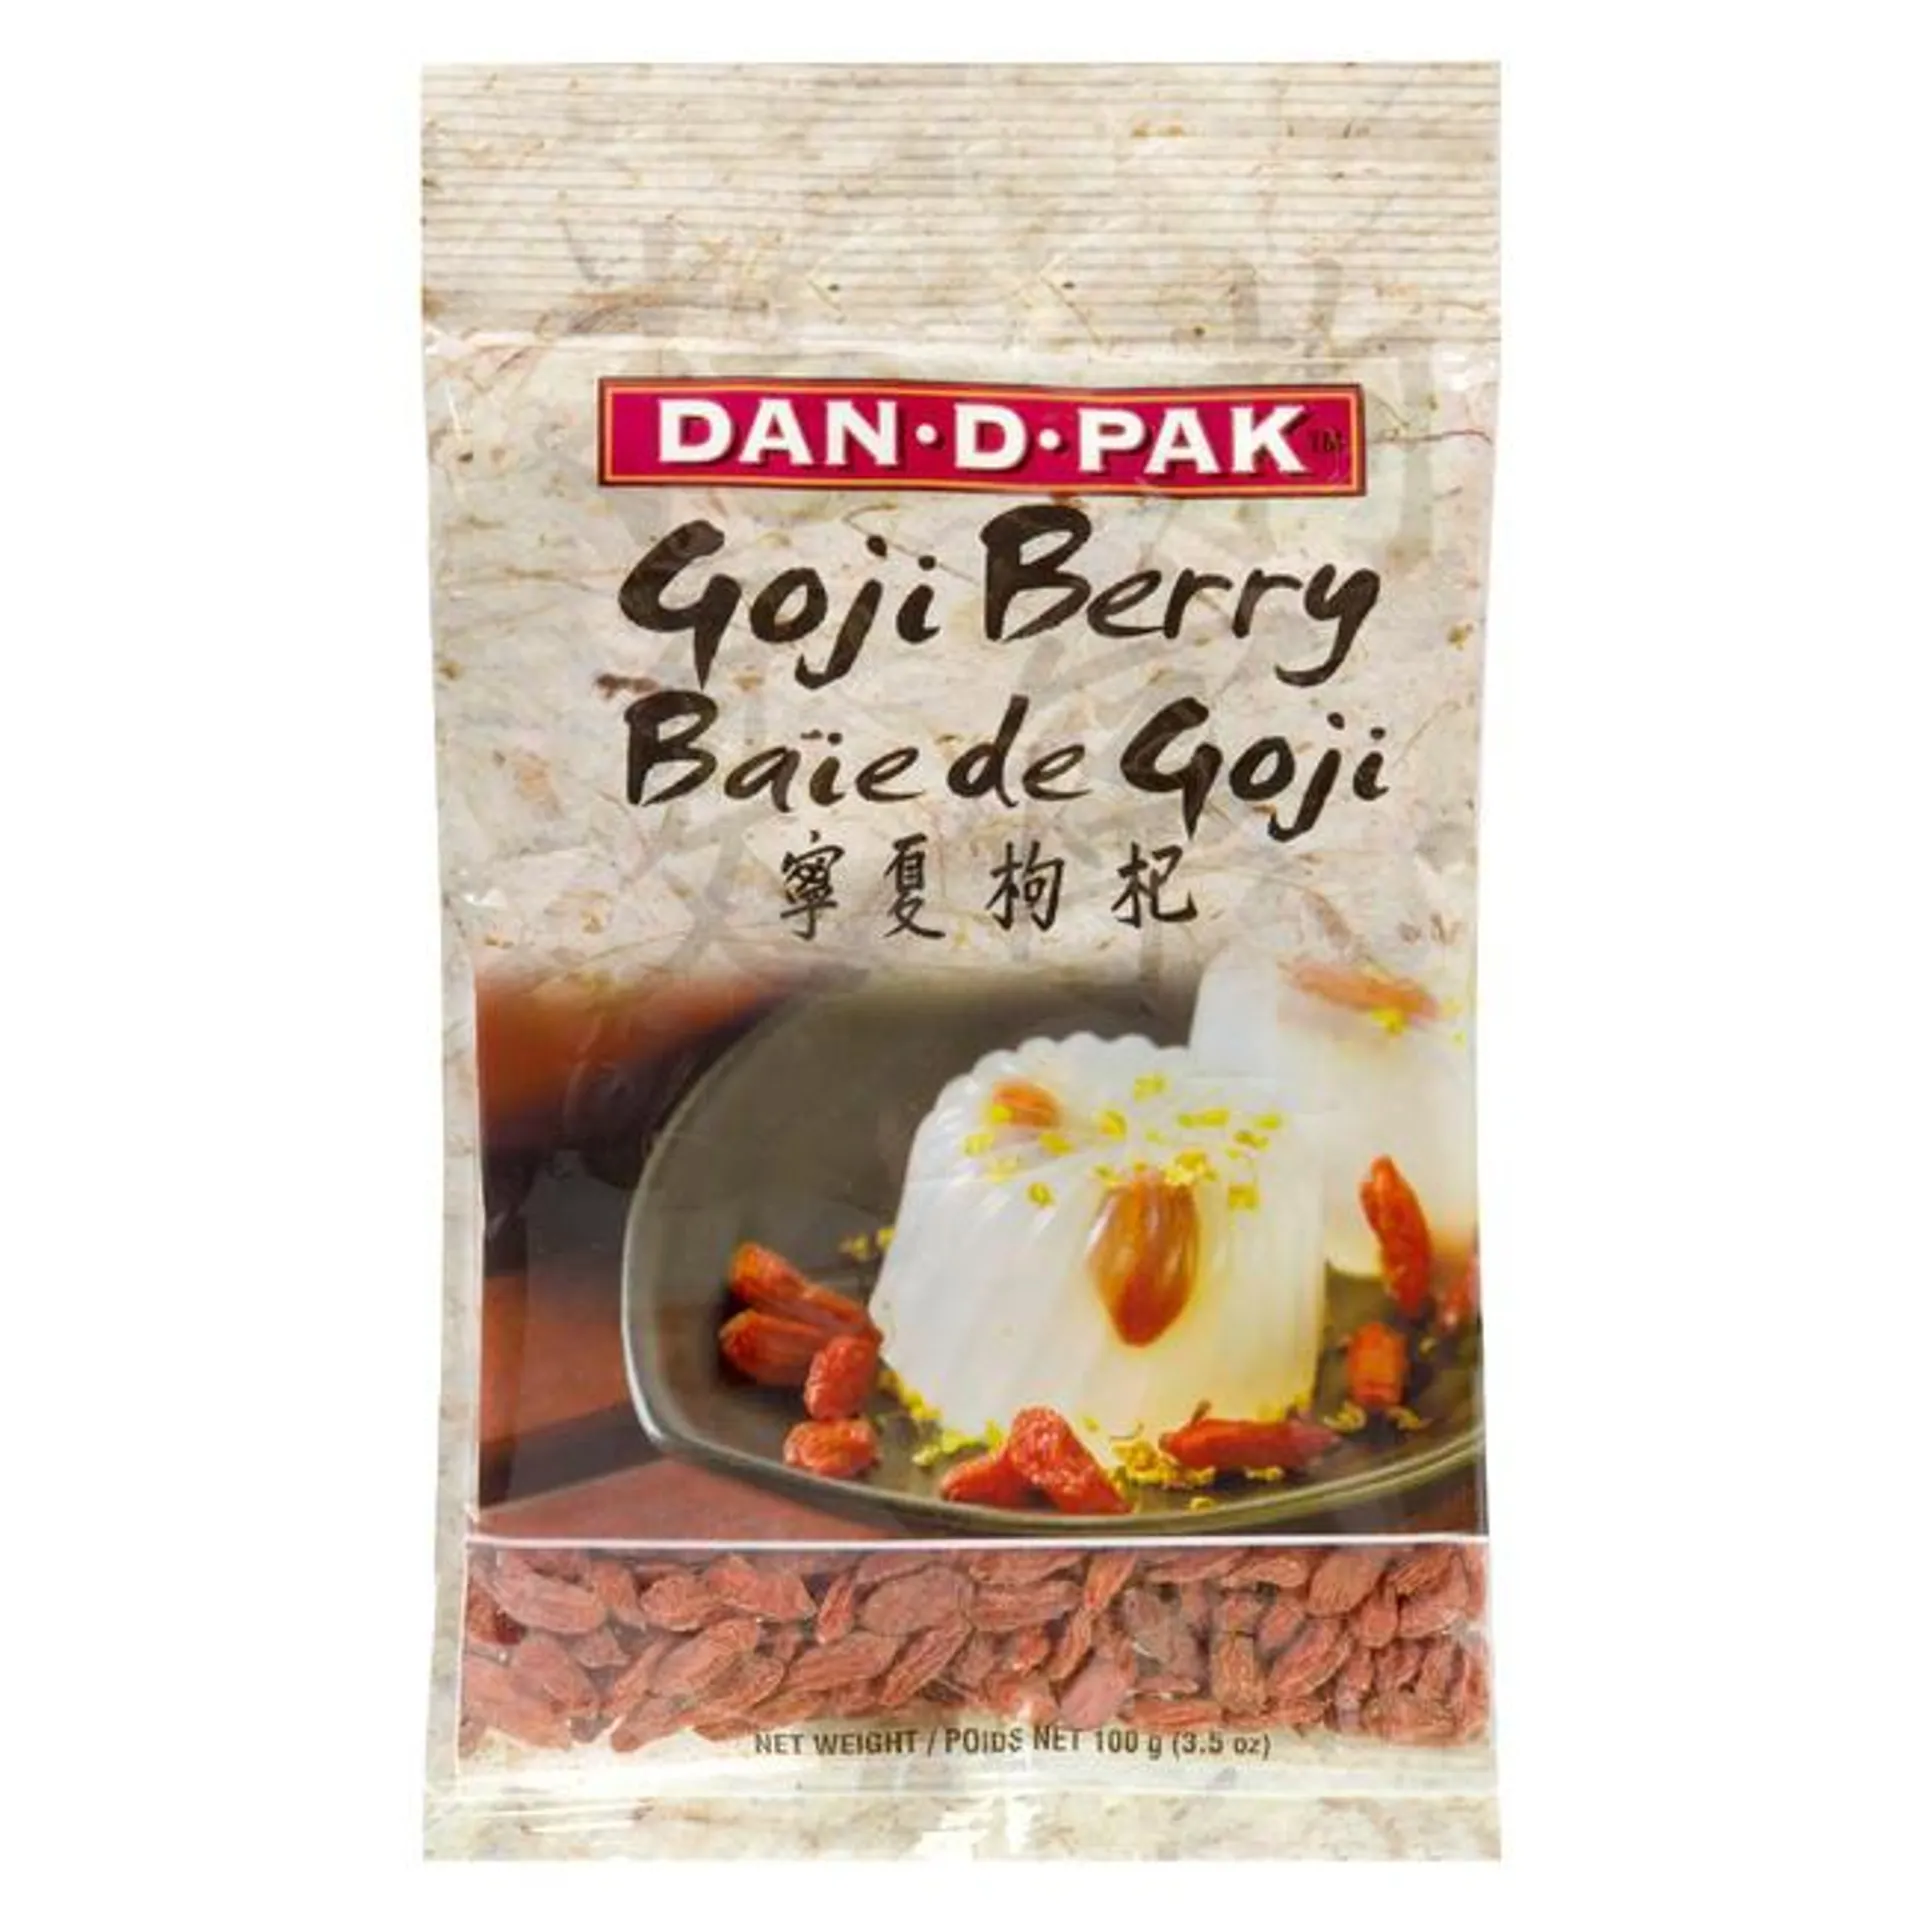 Dan-D-Pak - Goji Berry